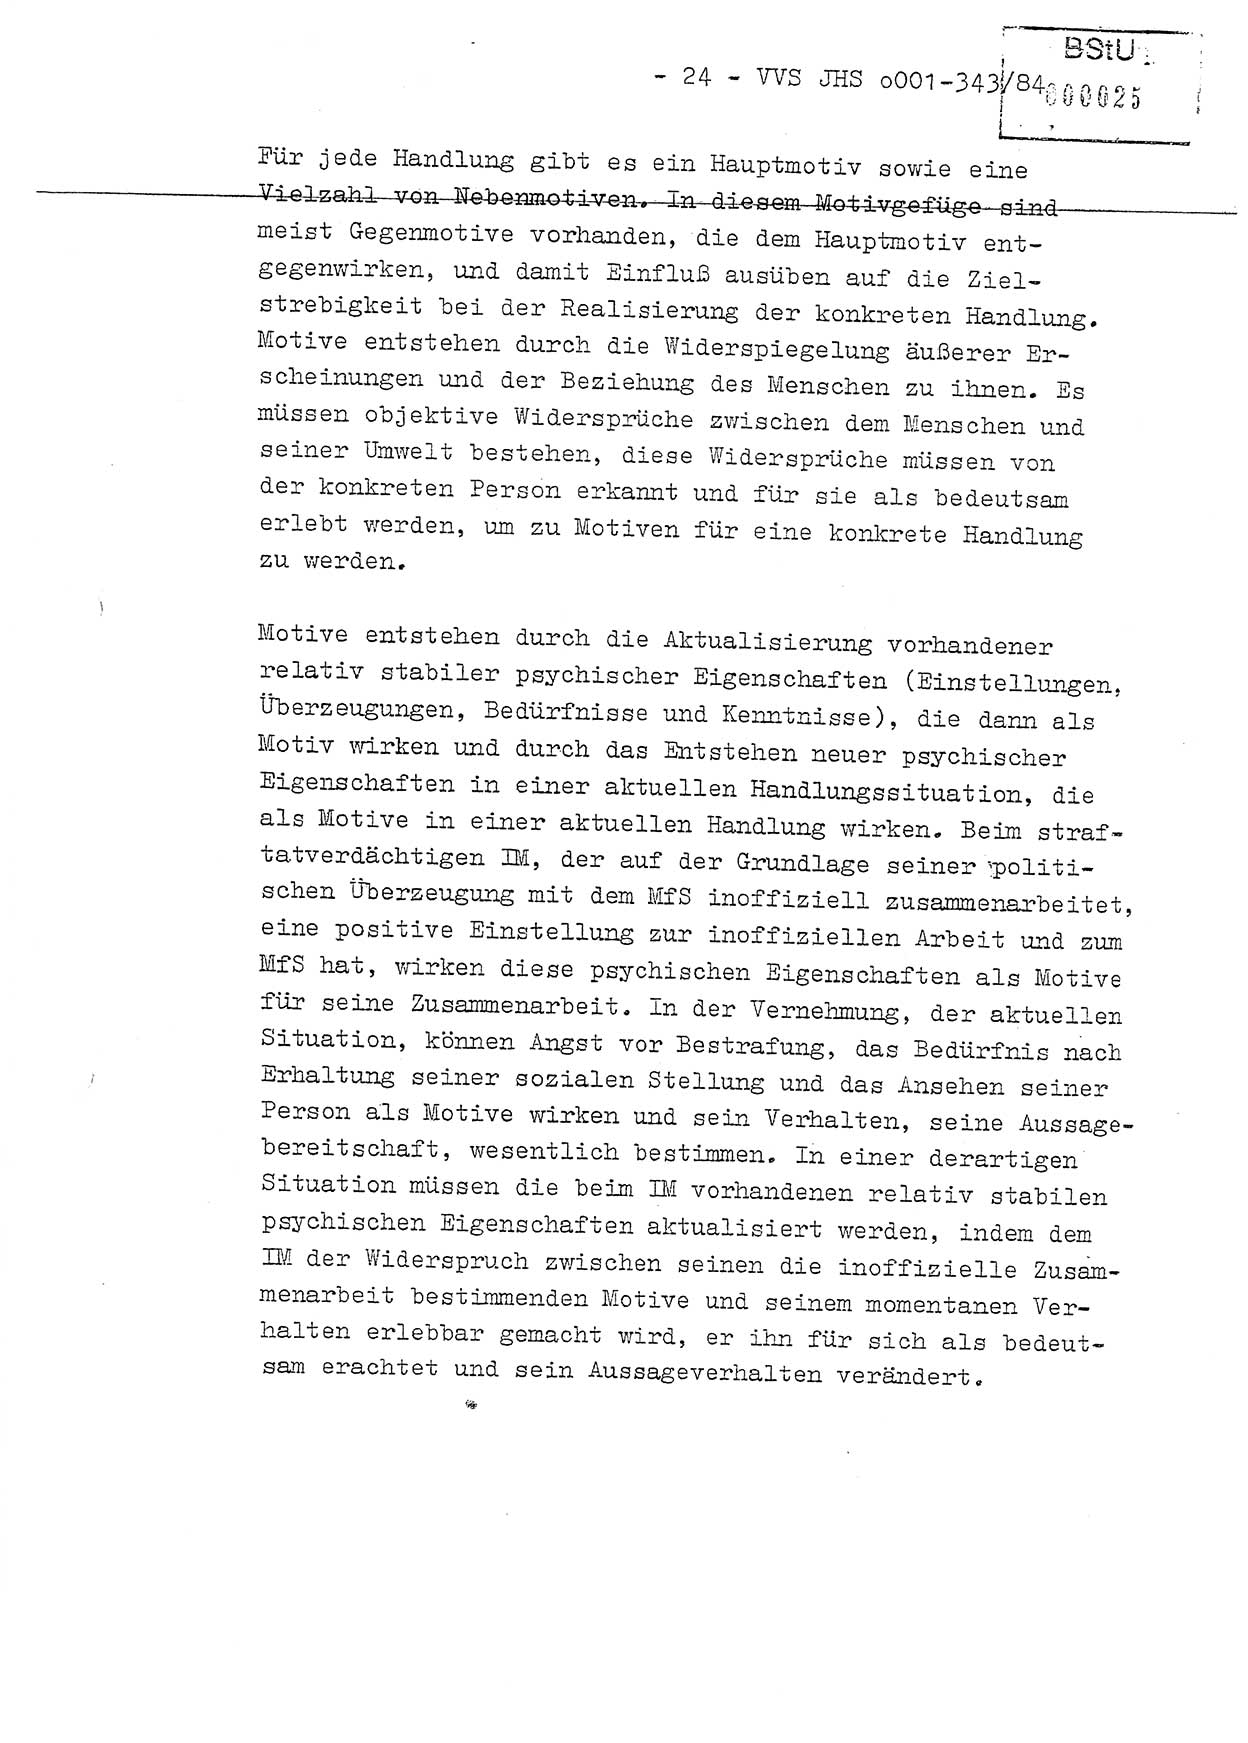 Diplomarbeit, Oberleutnant Bernd Michael (HA Ⅸ/5), Oberleutnant Peter Felber (HA IX/5), Ministerium für Staatssicherheit (MfS) [Deutsche Demokratische Republik (DDR)], Juristische Hochschule (JHS), Vertrauliche Verschlußsache (VVS) o001-343/84, Potsdam 1985, Seite 24 (Dipl.-Arb. MfS DDR JHS VVS o001-343/84 1985, S. 24)